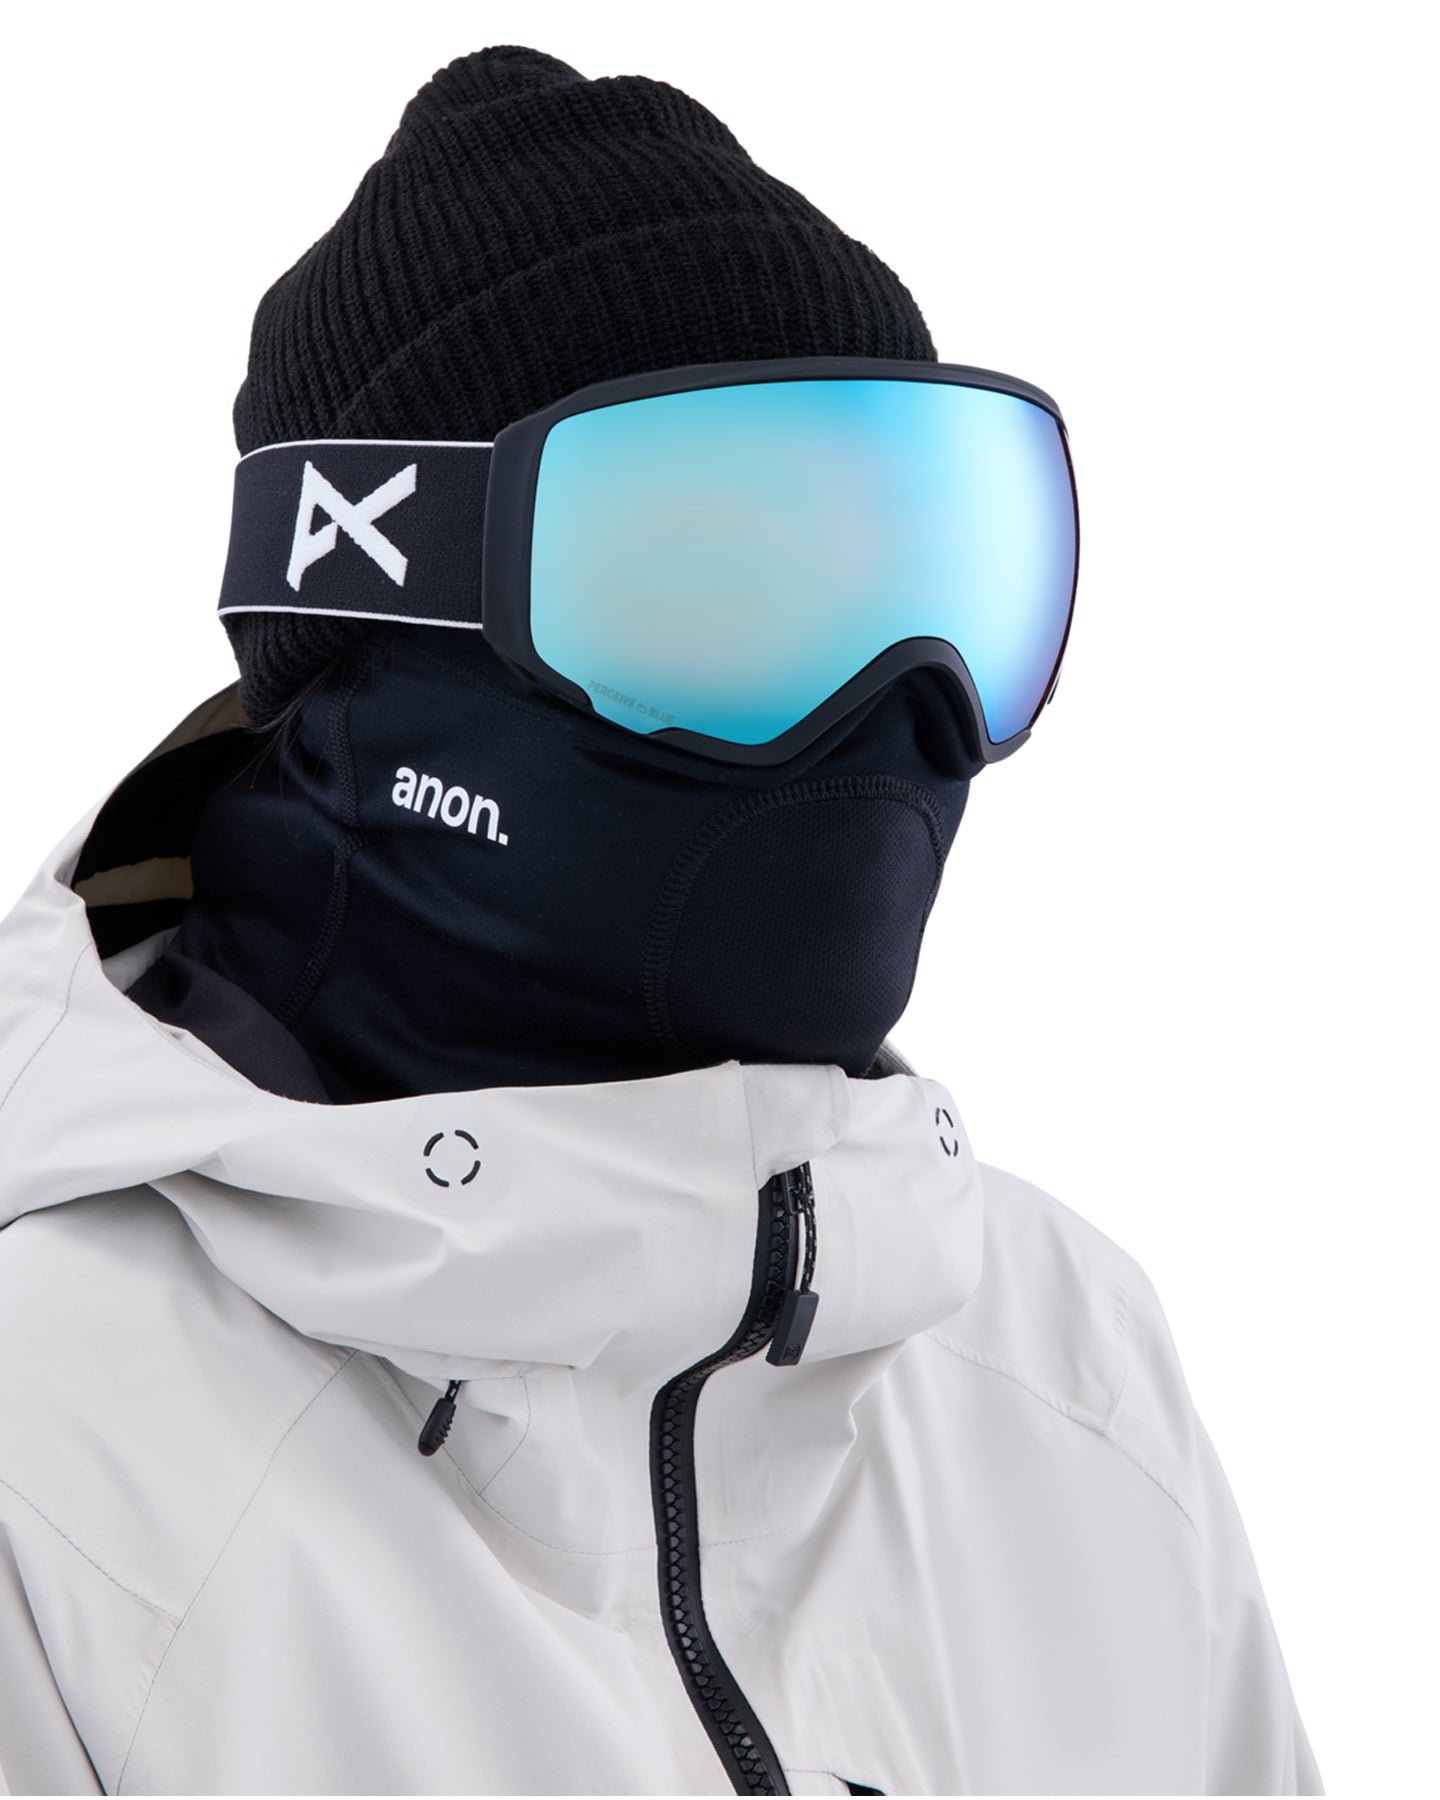 Anon WM1 Low Bridge Fit Snow Goggles + Bonus Lens + MFI - Black / Perceive Variable Blue Women's Snow Goggles - Trojan Wake Ski Snow